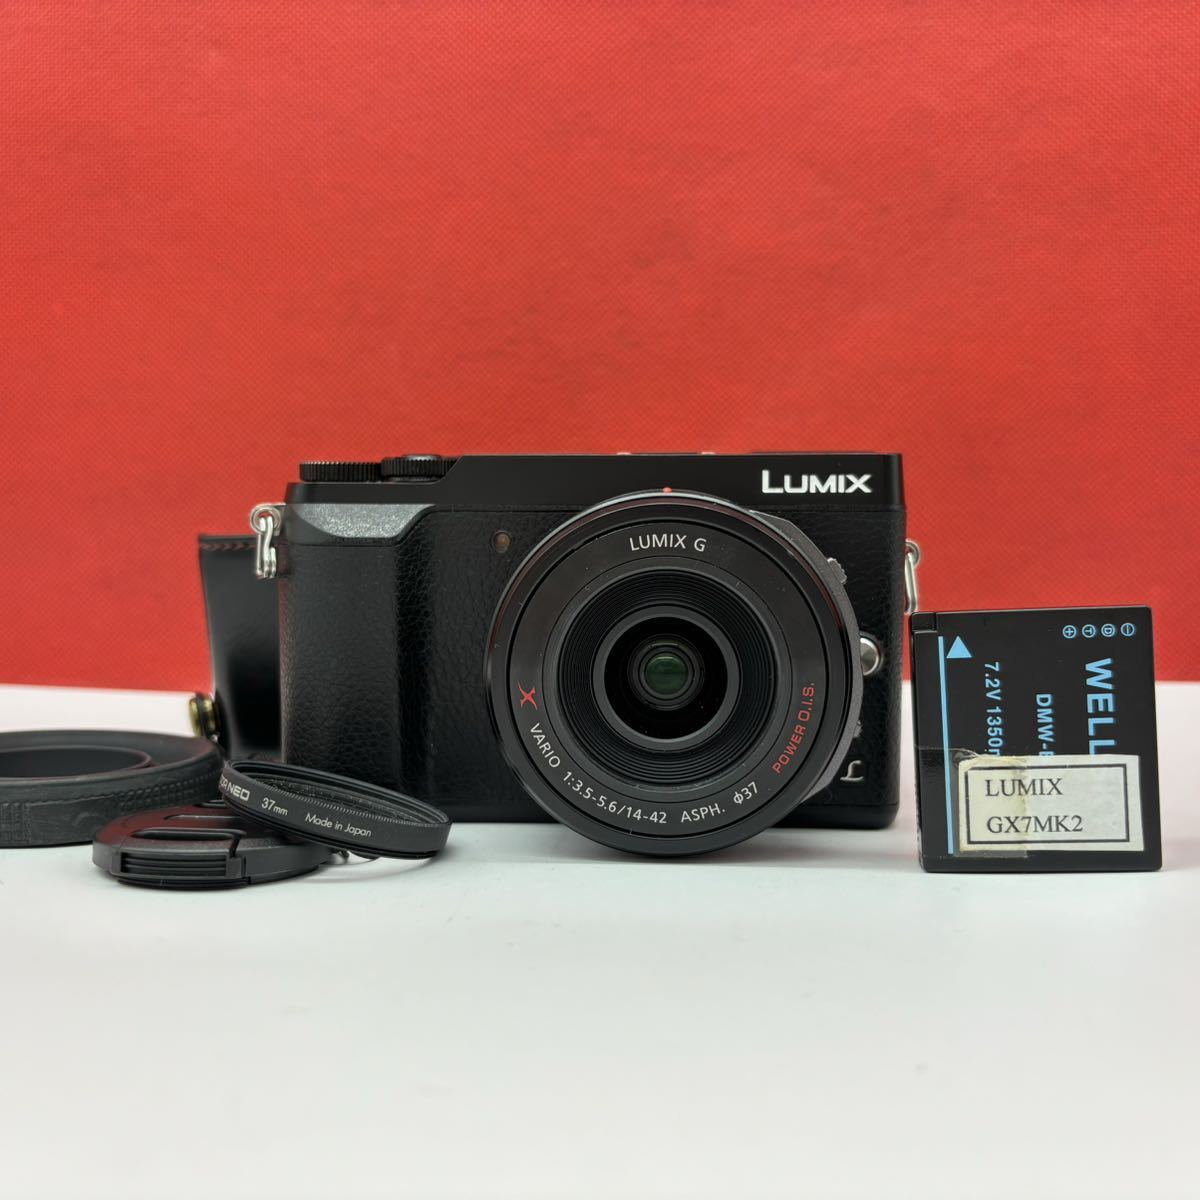 Panasonic DMC-GX7MK2 LUMIX ミラーレス一眼レフカメラ ブラック LUMIX G VARIO F3.5-5.6/14-42 ASPH. シャッターOK パナソニック